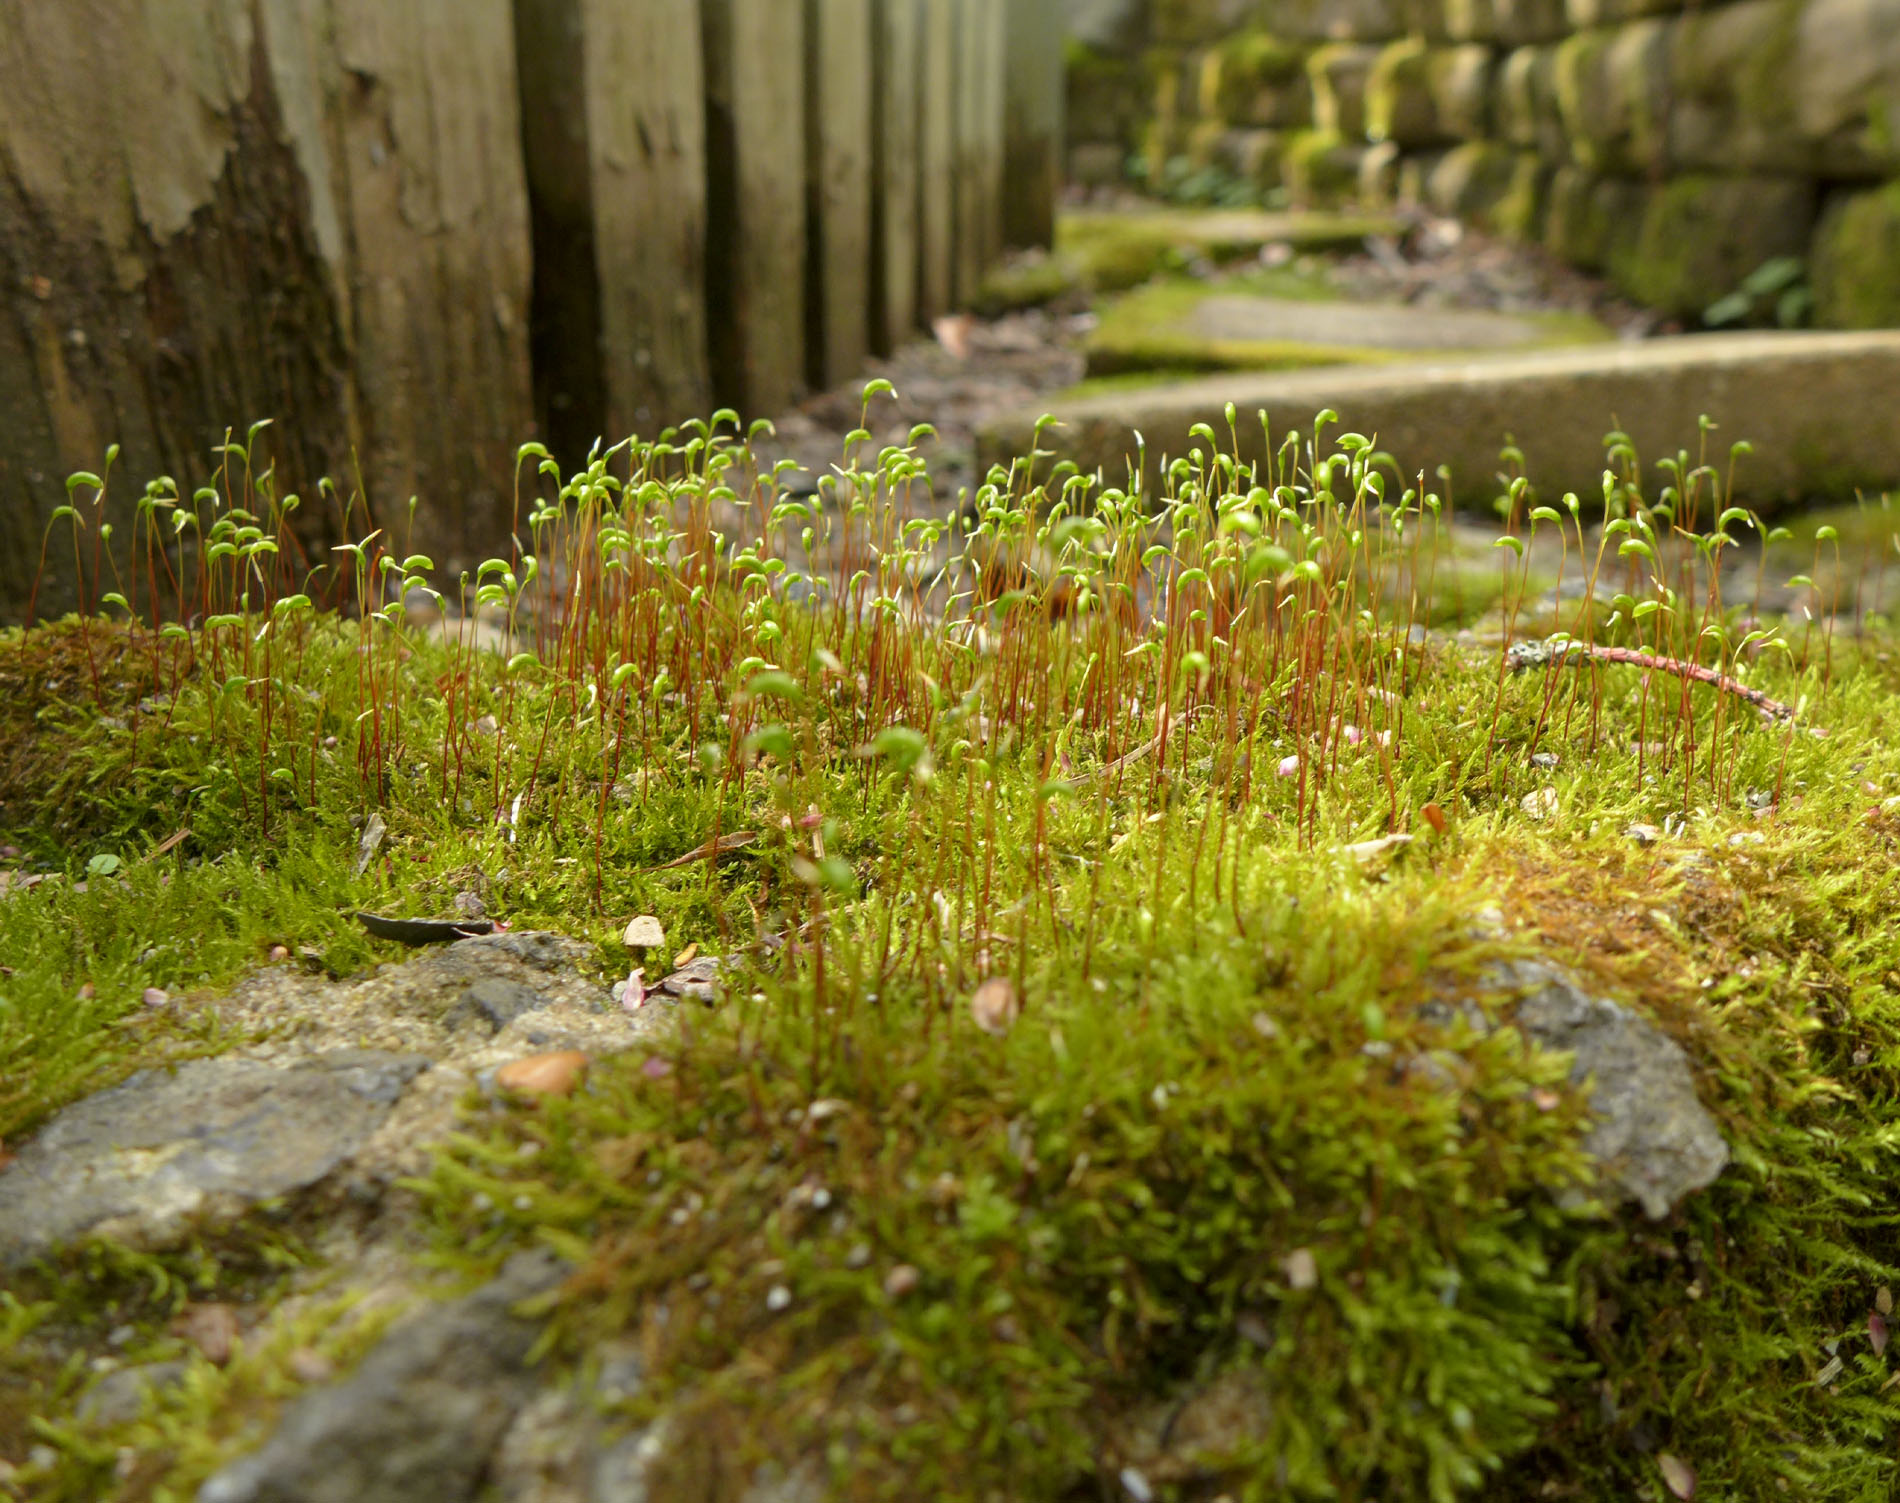 Mossy stone with lichen